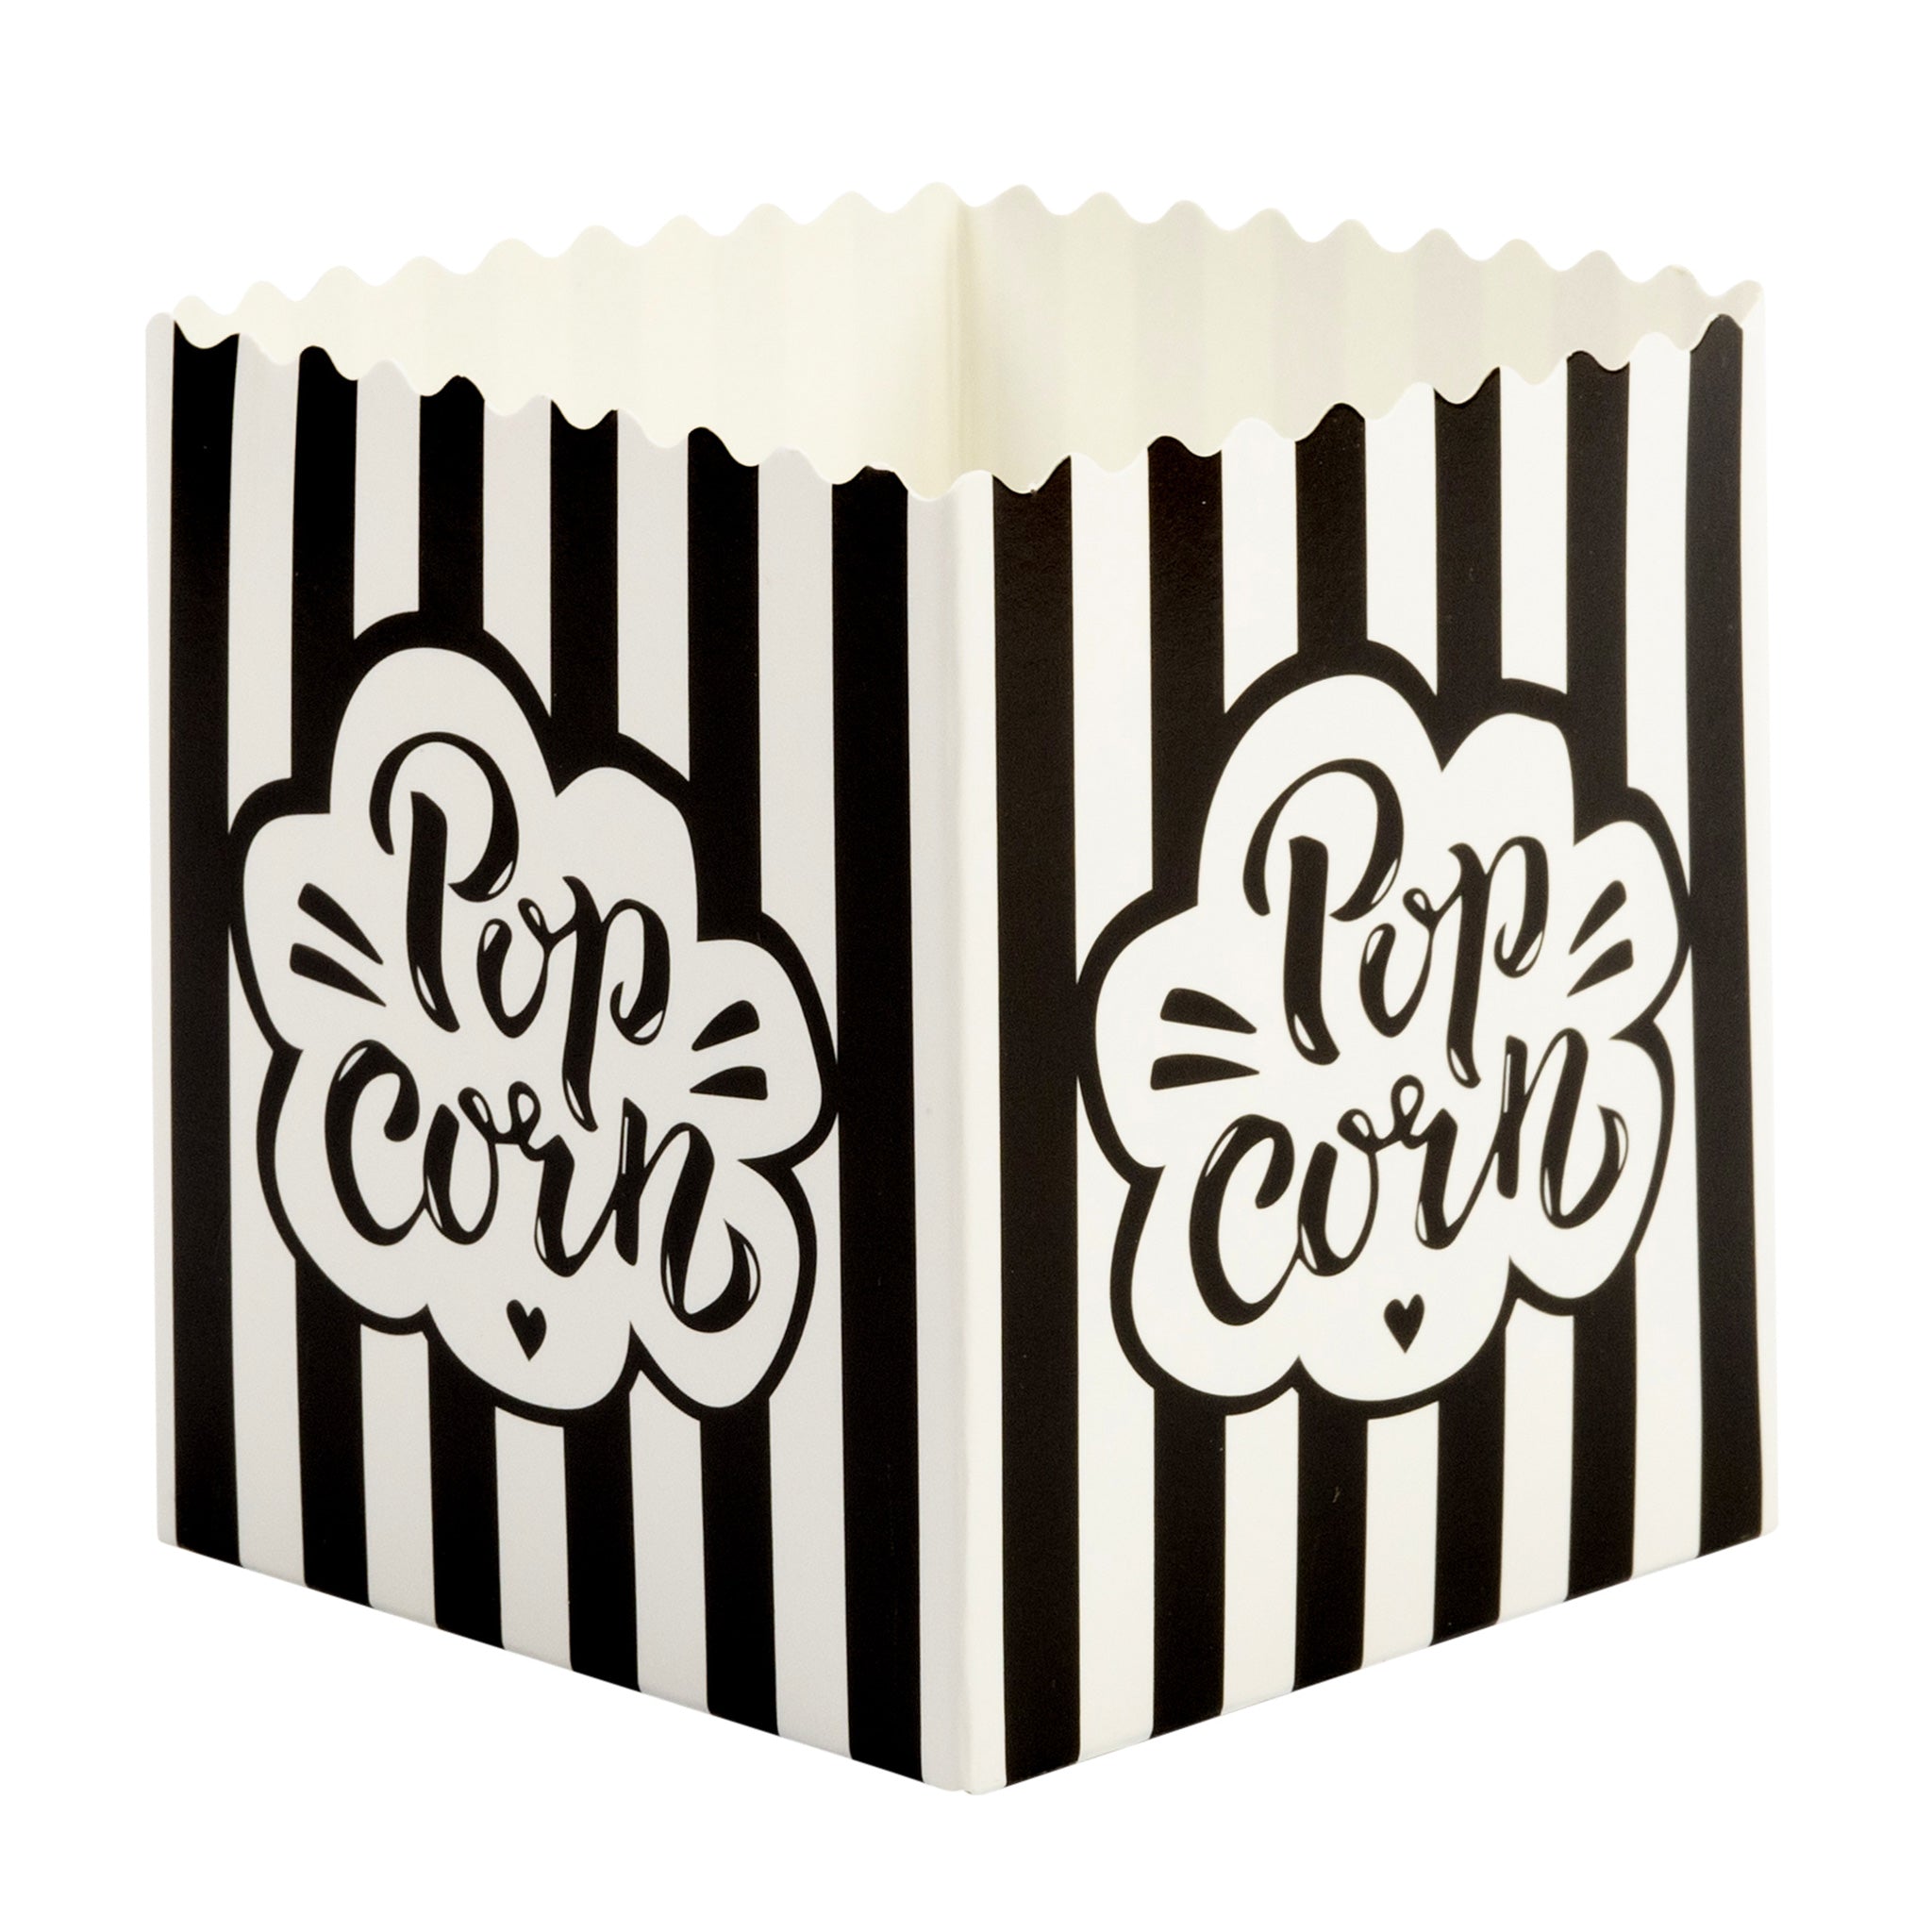 Black & White Striped popcorn boxes